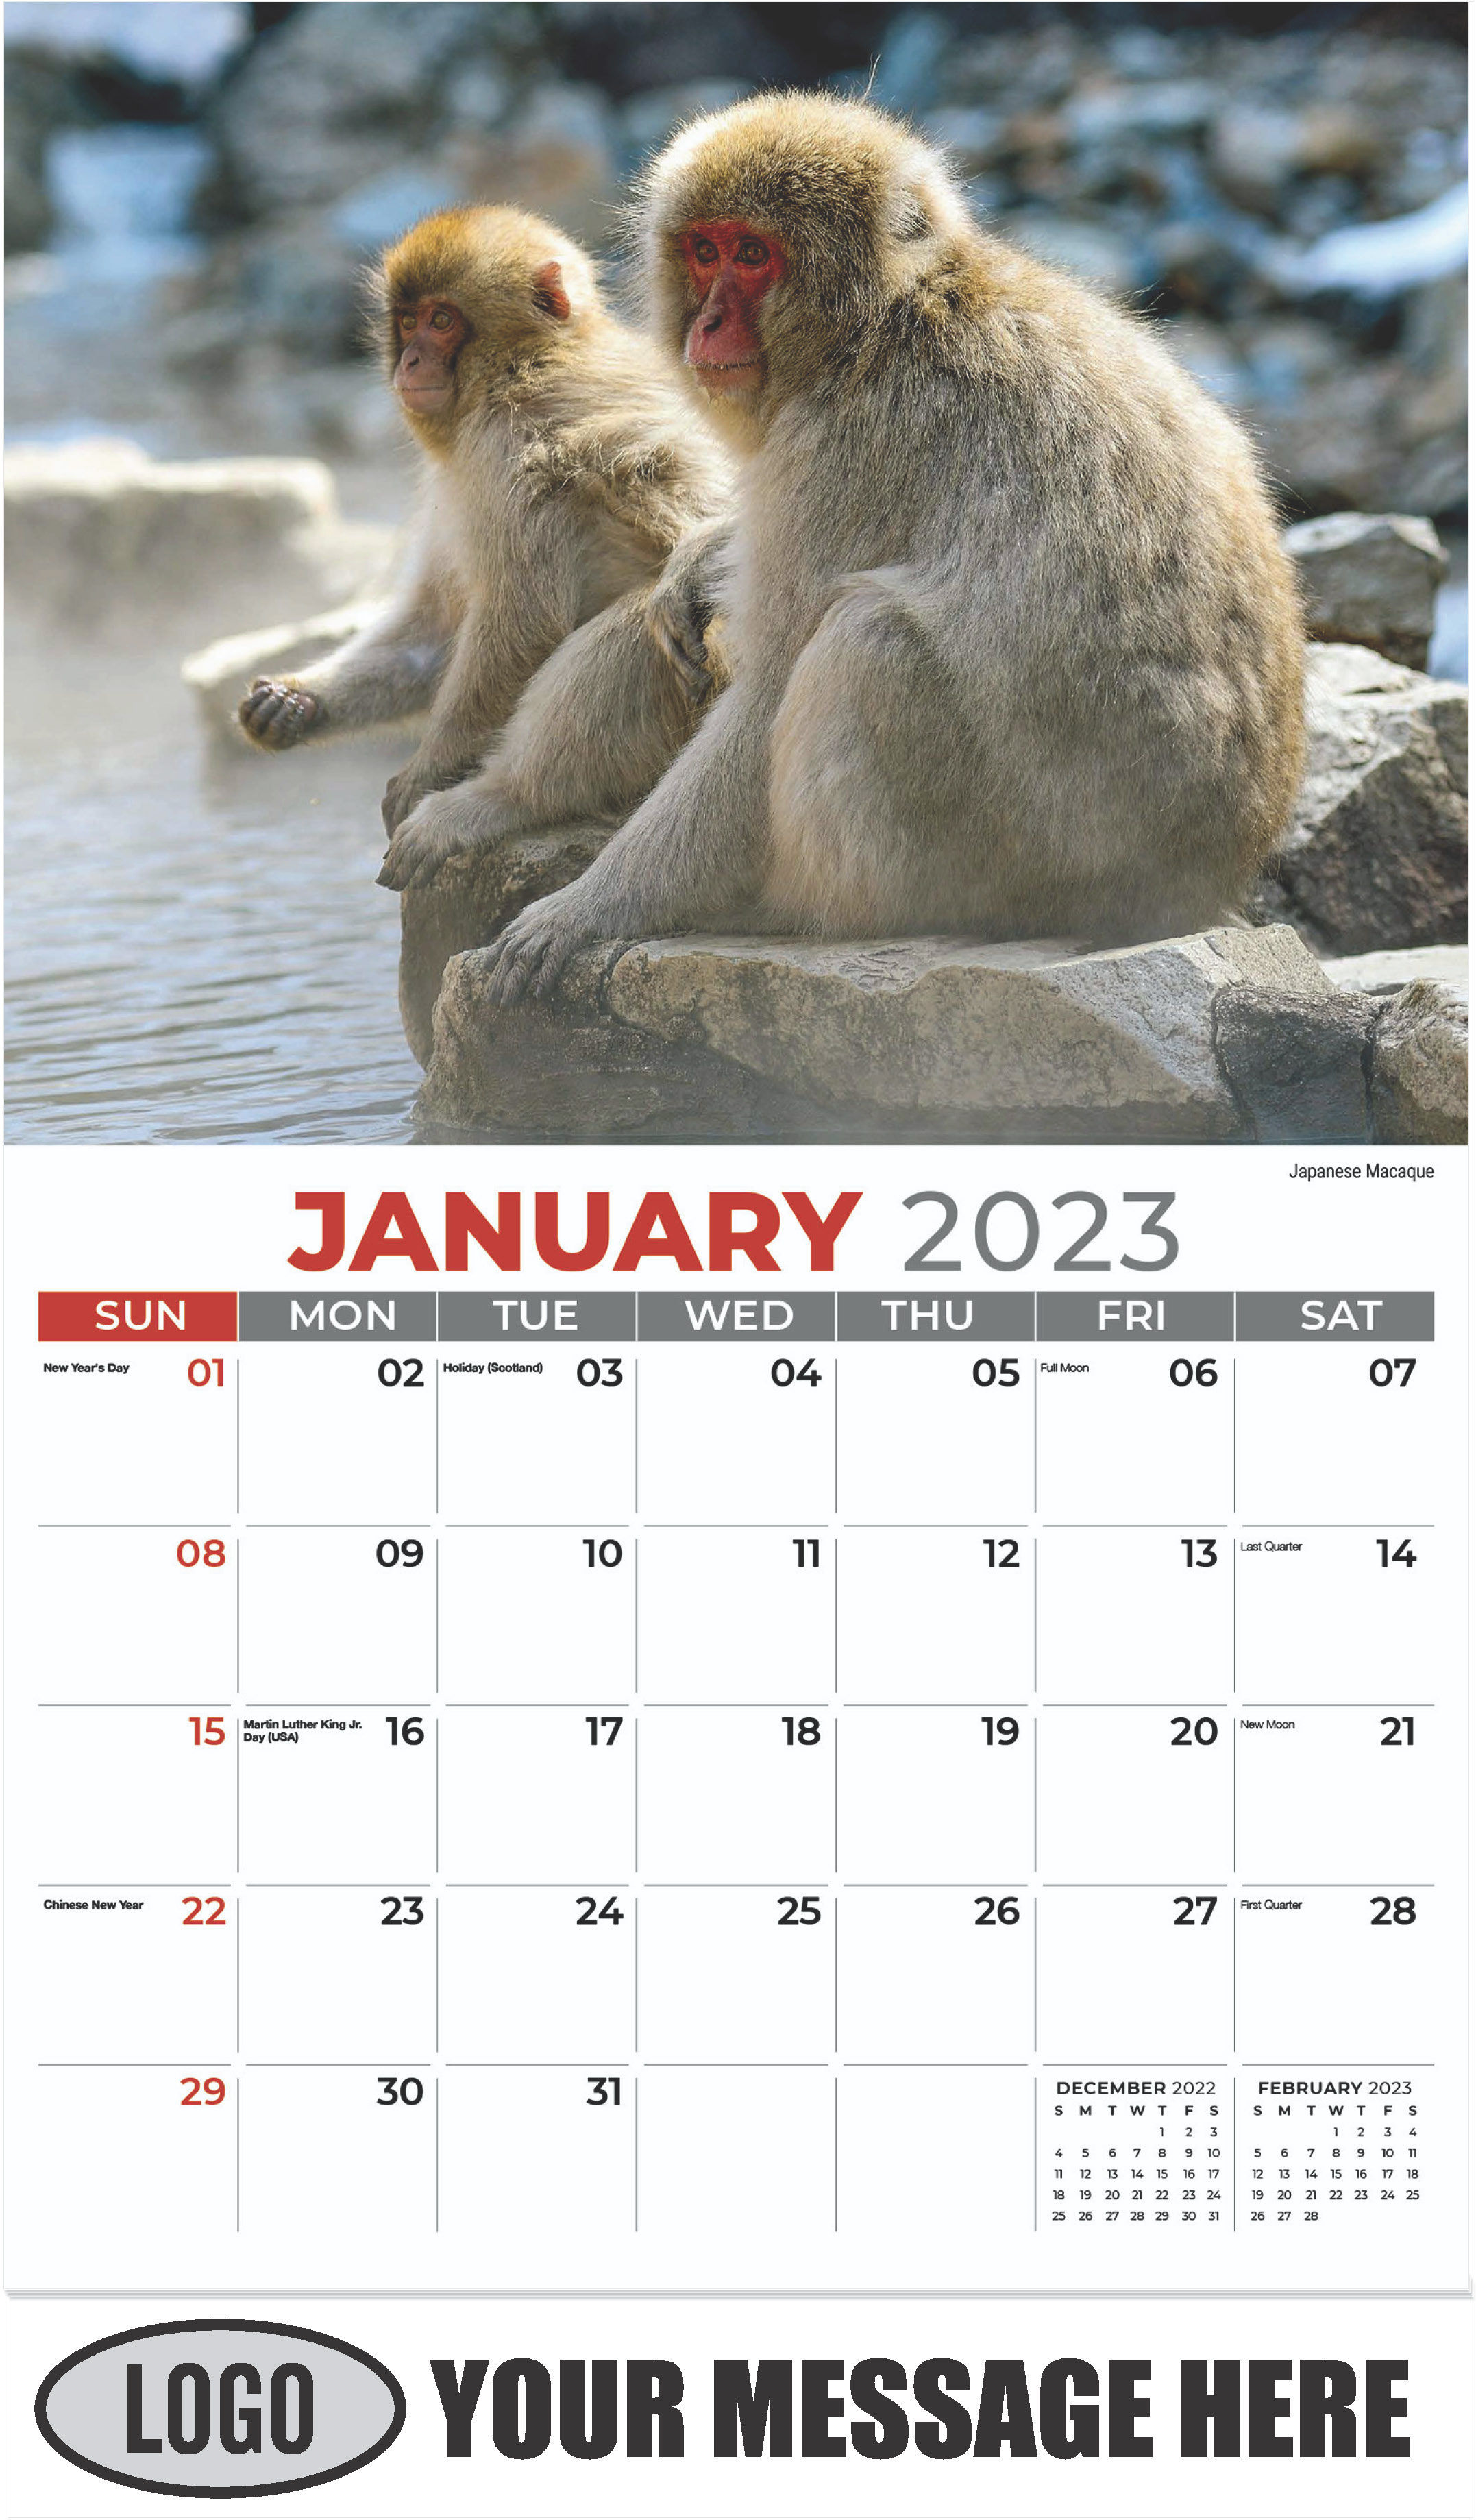 Japanese Macaque - January - International Wildlife 2023 Promotional Calendar